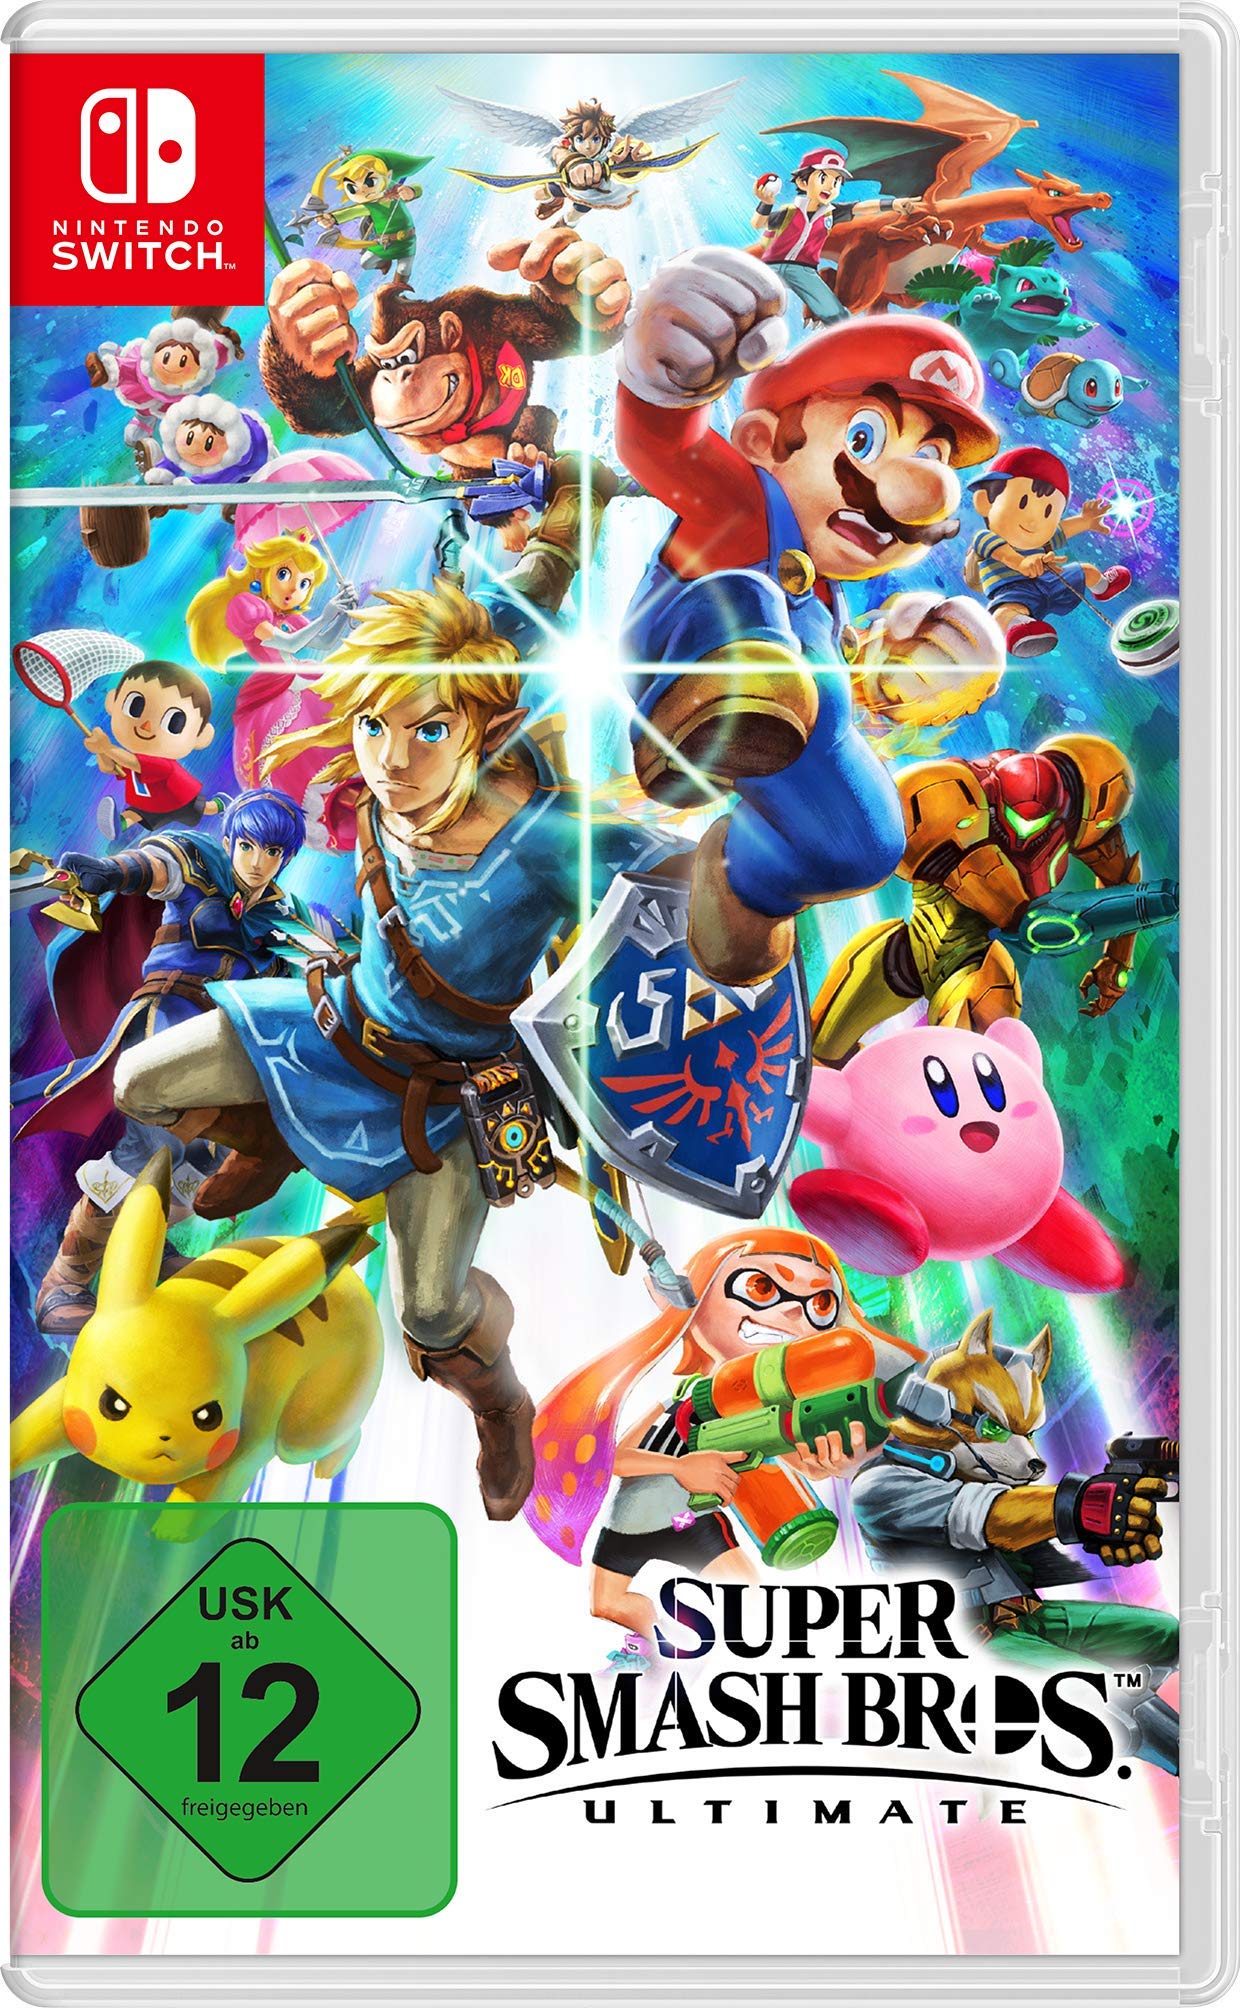 Nintendo Switch DE - Super Smash Bros. Ultimate.jpg